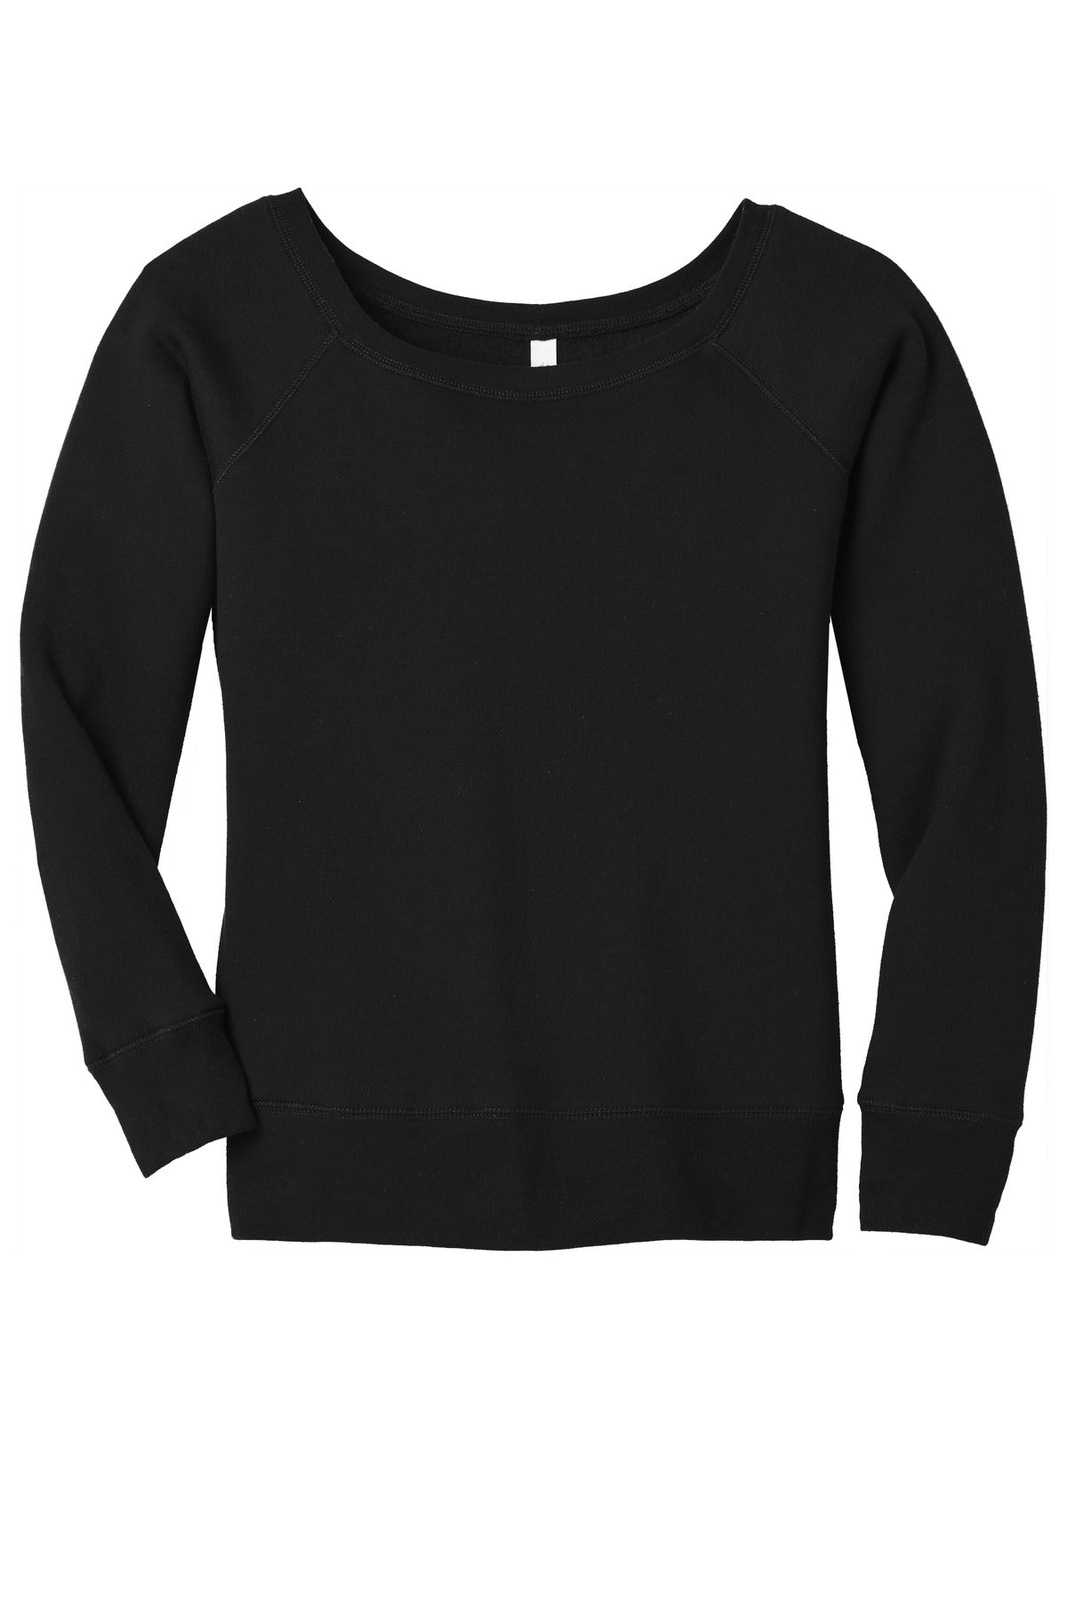 Bella + Canvas 7501 Women's Sponge Fleece Wide-Neck Sweatshirt - Solid Black Triblend - HIT a Double